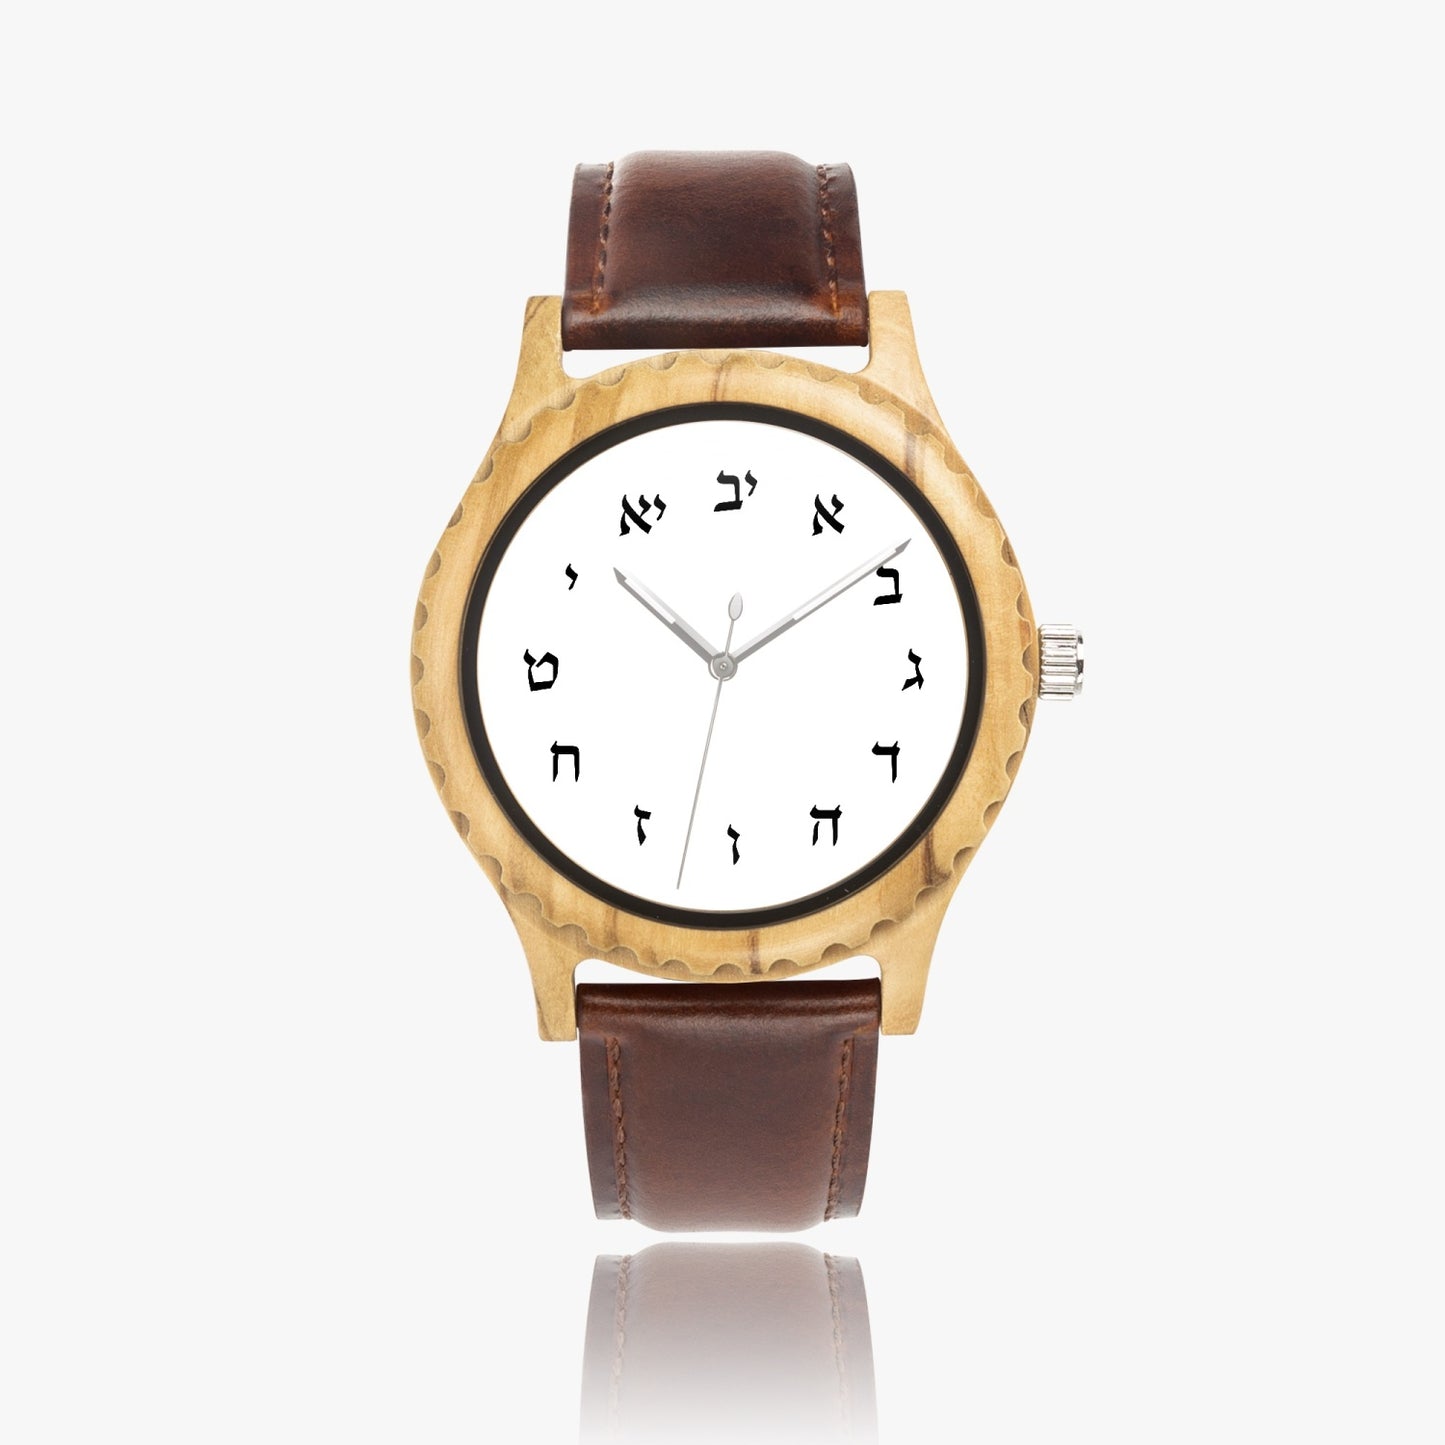 Hebrew Wooden Watch - Brown Leather Strap